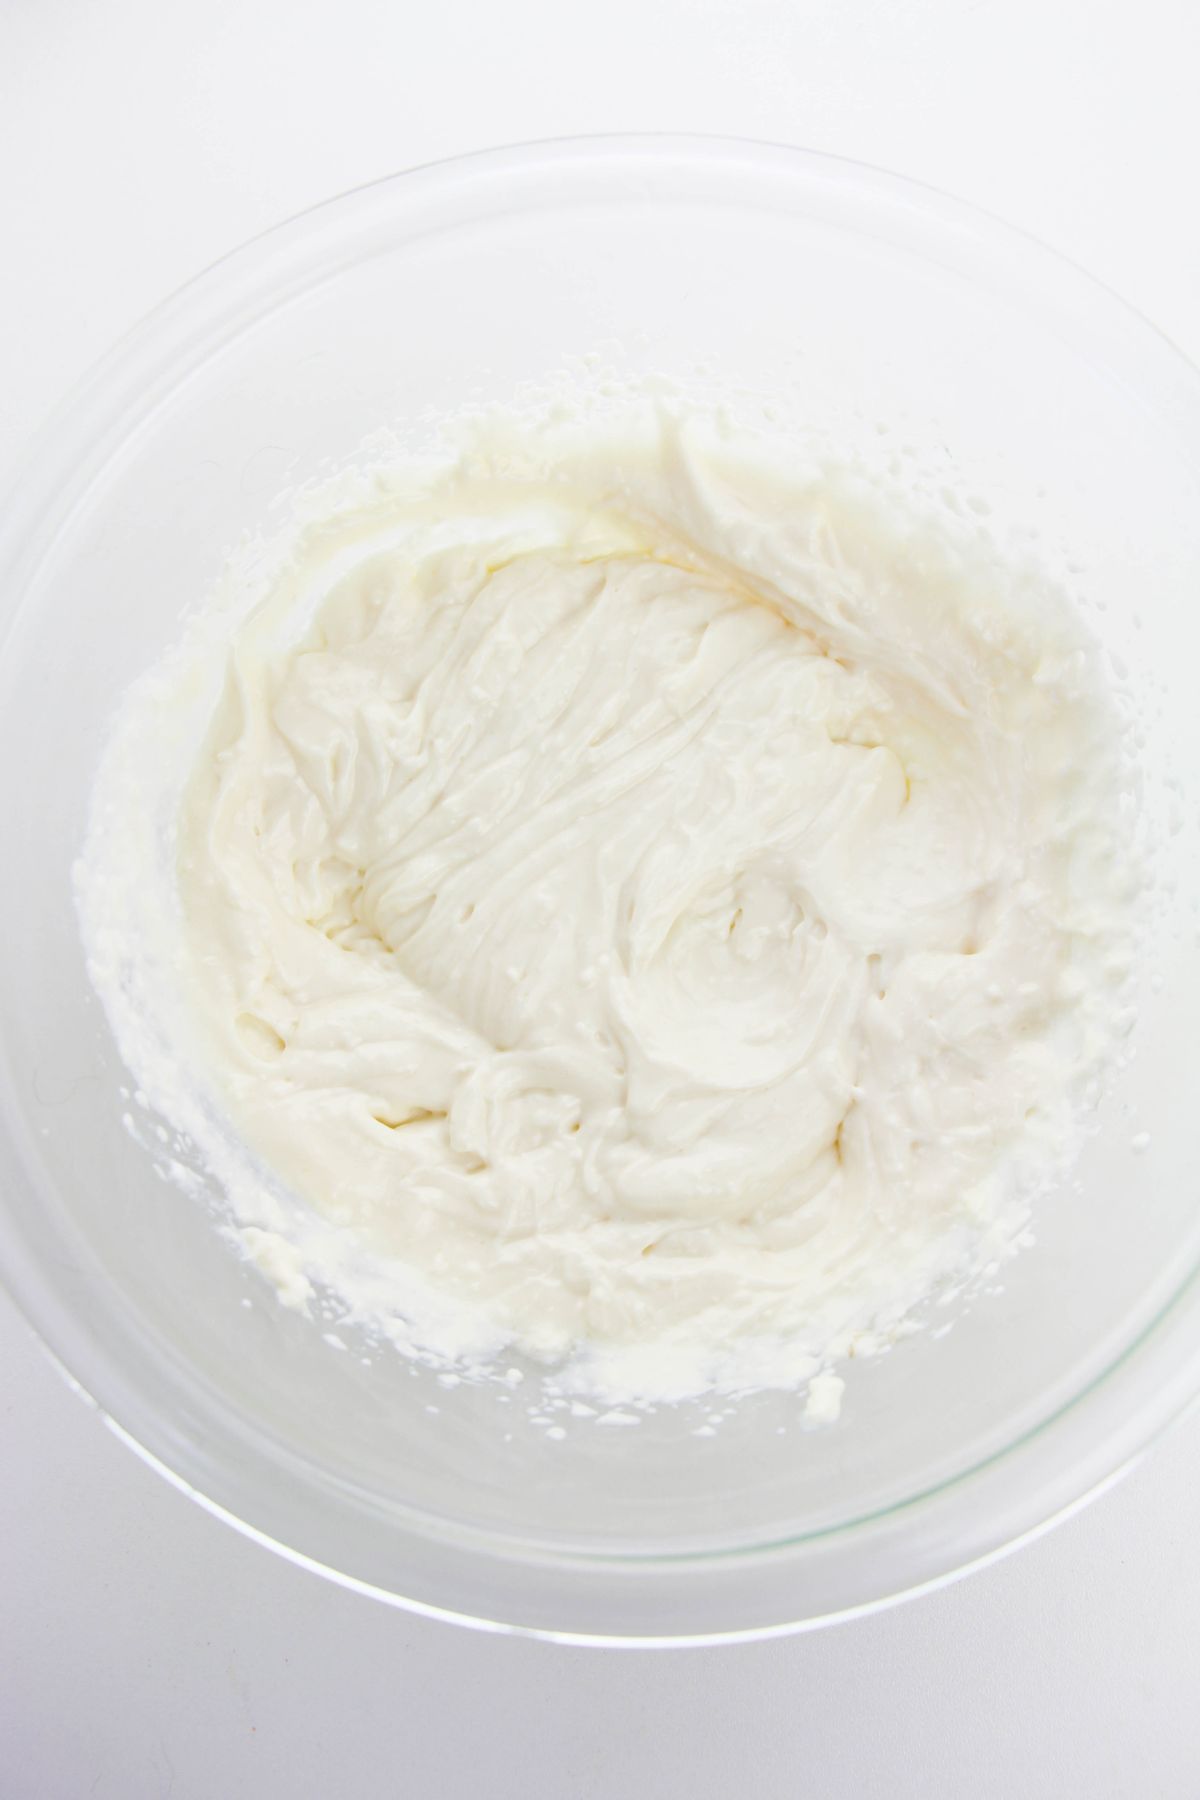 cream cheese, yogurt, white sugar, and vanilla extract in a large bowl.